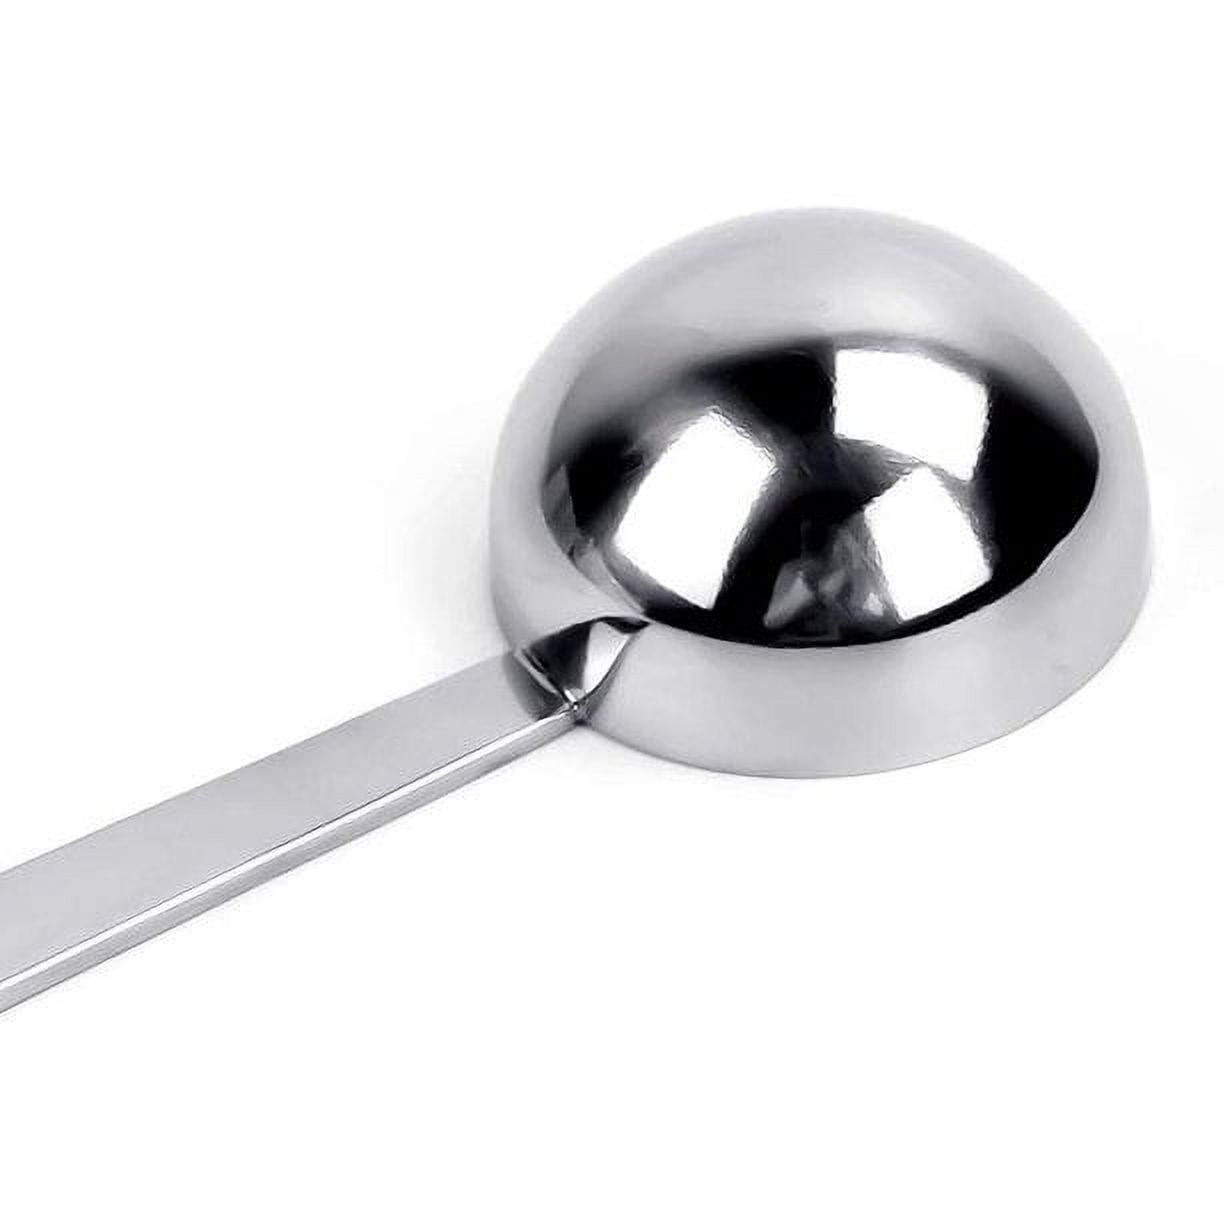 Coffee Scoops - Long Handled Stainless Steel Spoons (2-Pack) – Orblue